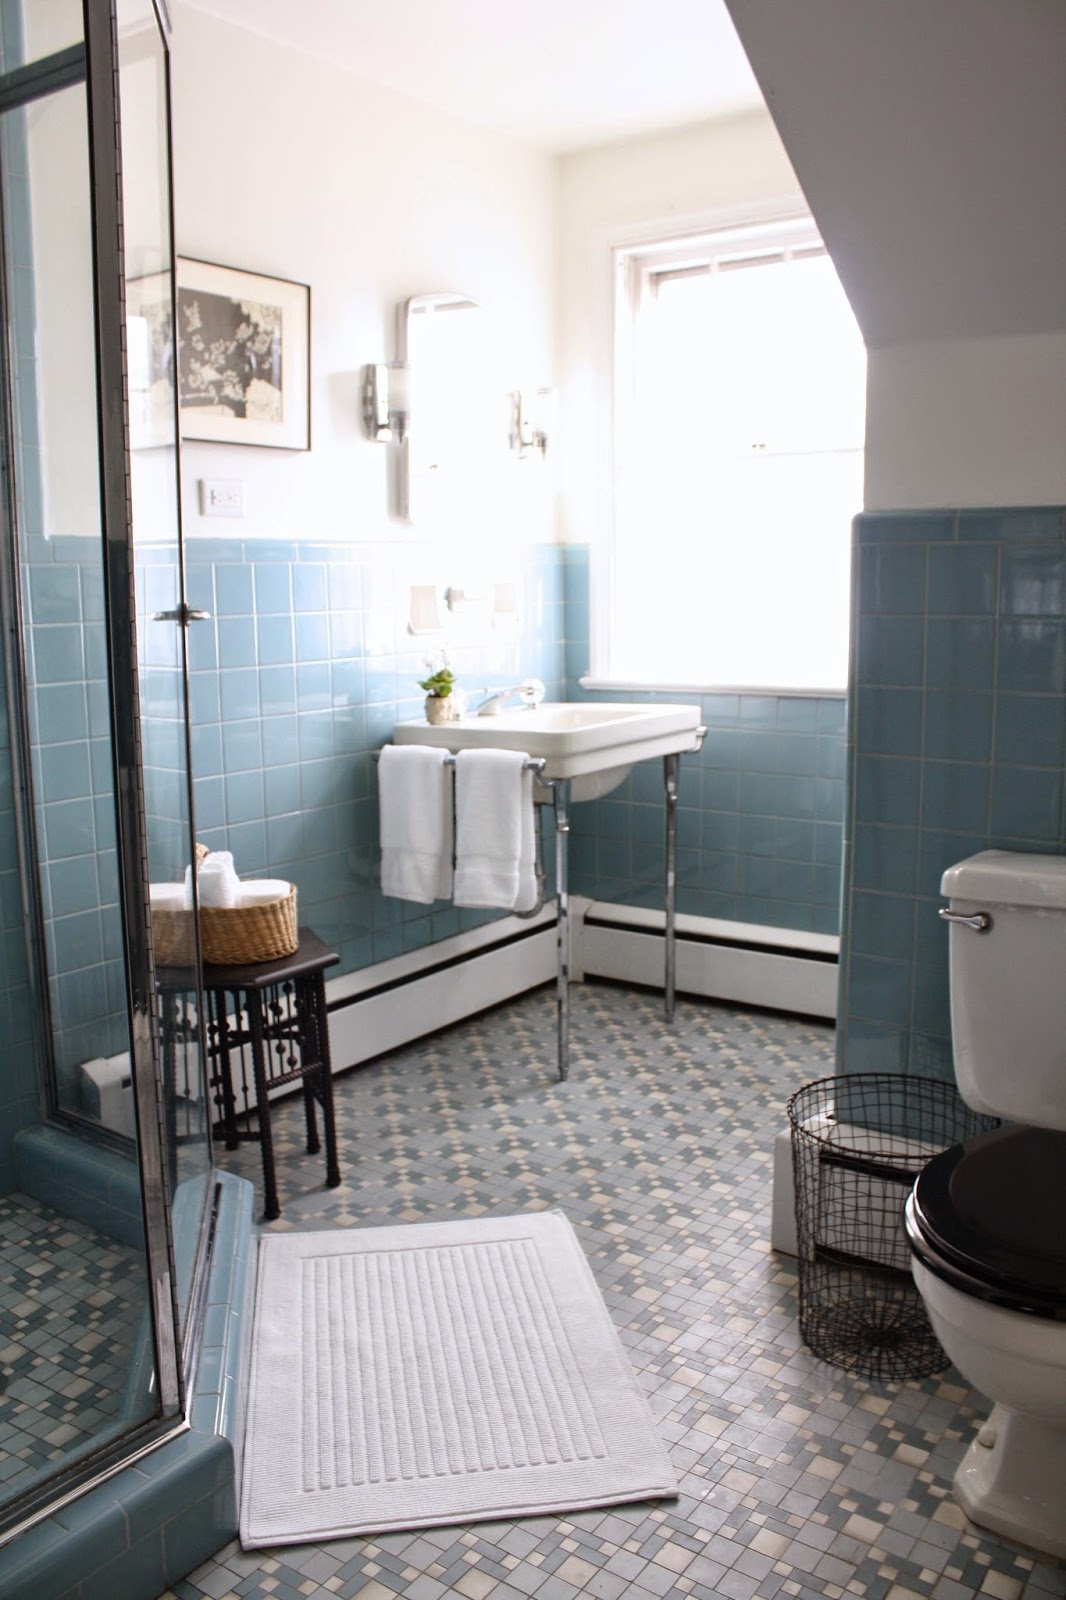 Bathroom Tile Design Ideas For Small Bathrooms New Car Price 2020